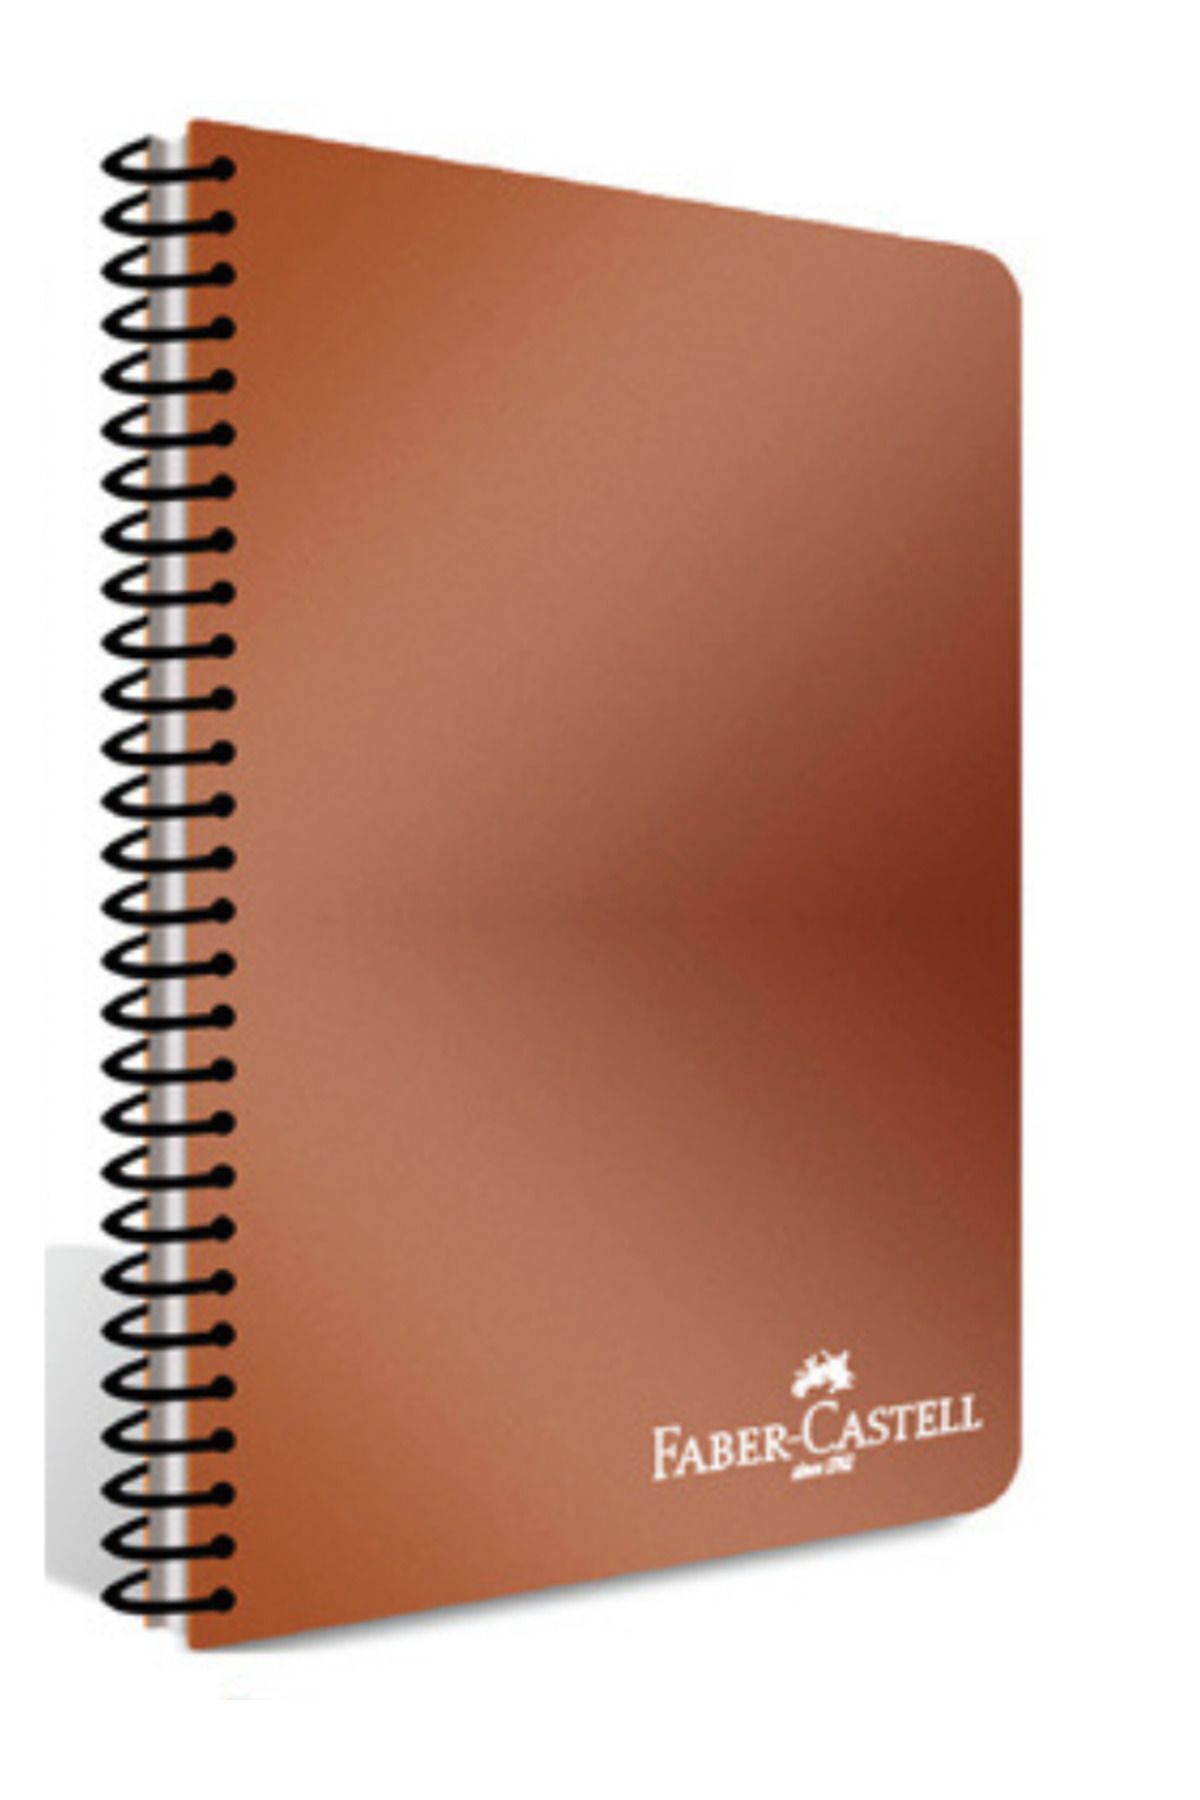 Faber Castell PLASTİK KAPAKLI SPİRALLİ DEFTER METALİK RENKLER A4 100 YP. ÇİZGİLİ – METALİK KİREMİT